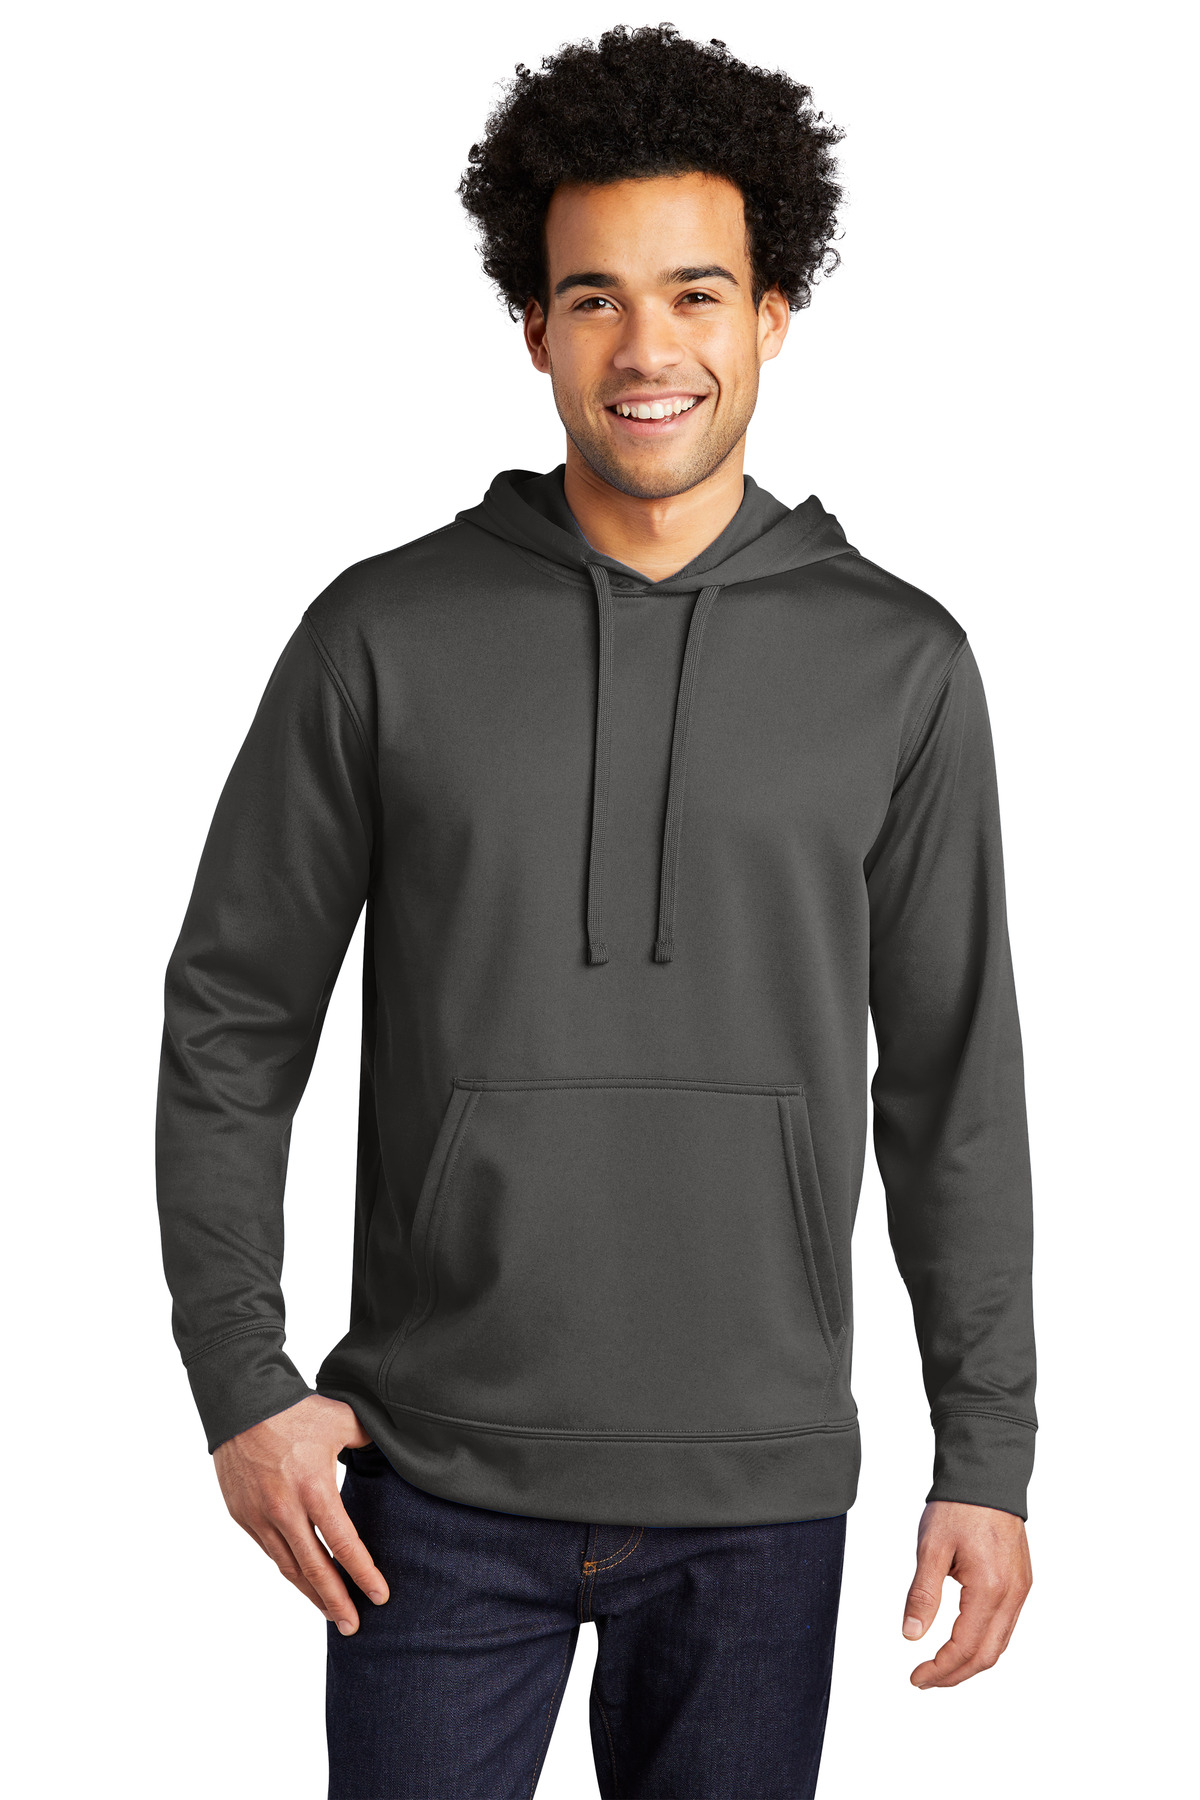 Port &#38; Company Performance Fleece Pullover Hooded Sweatshirt-Port & Company